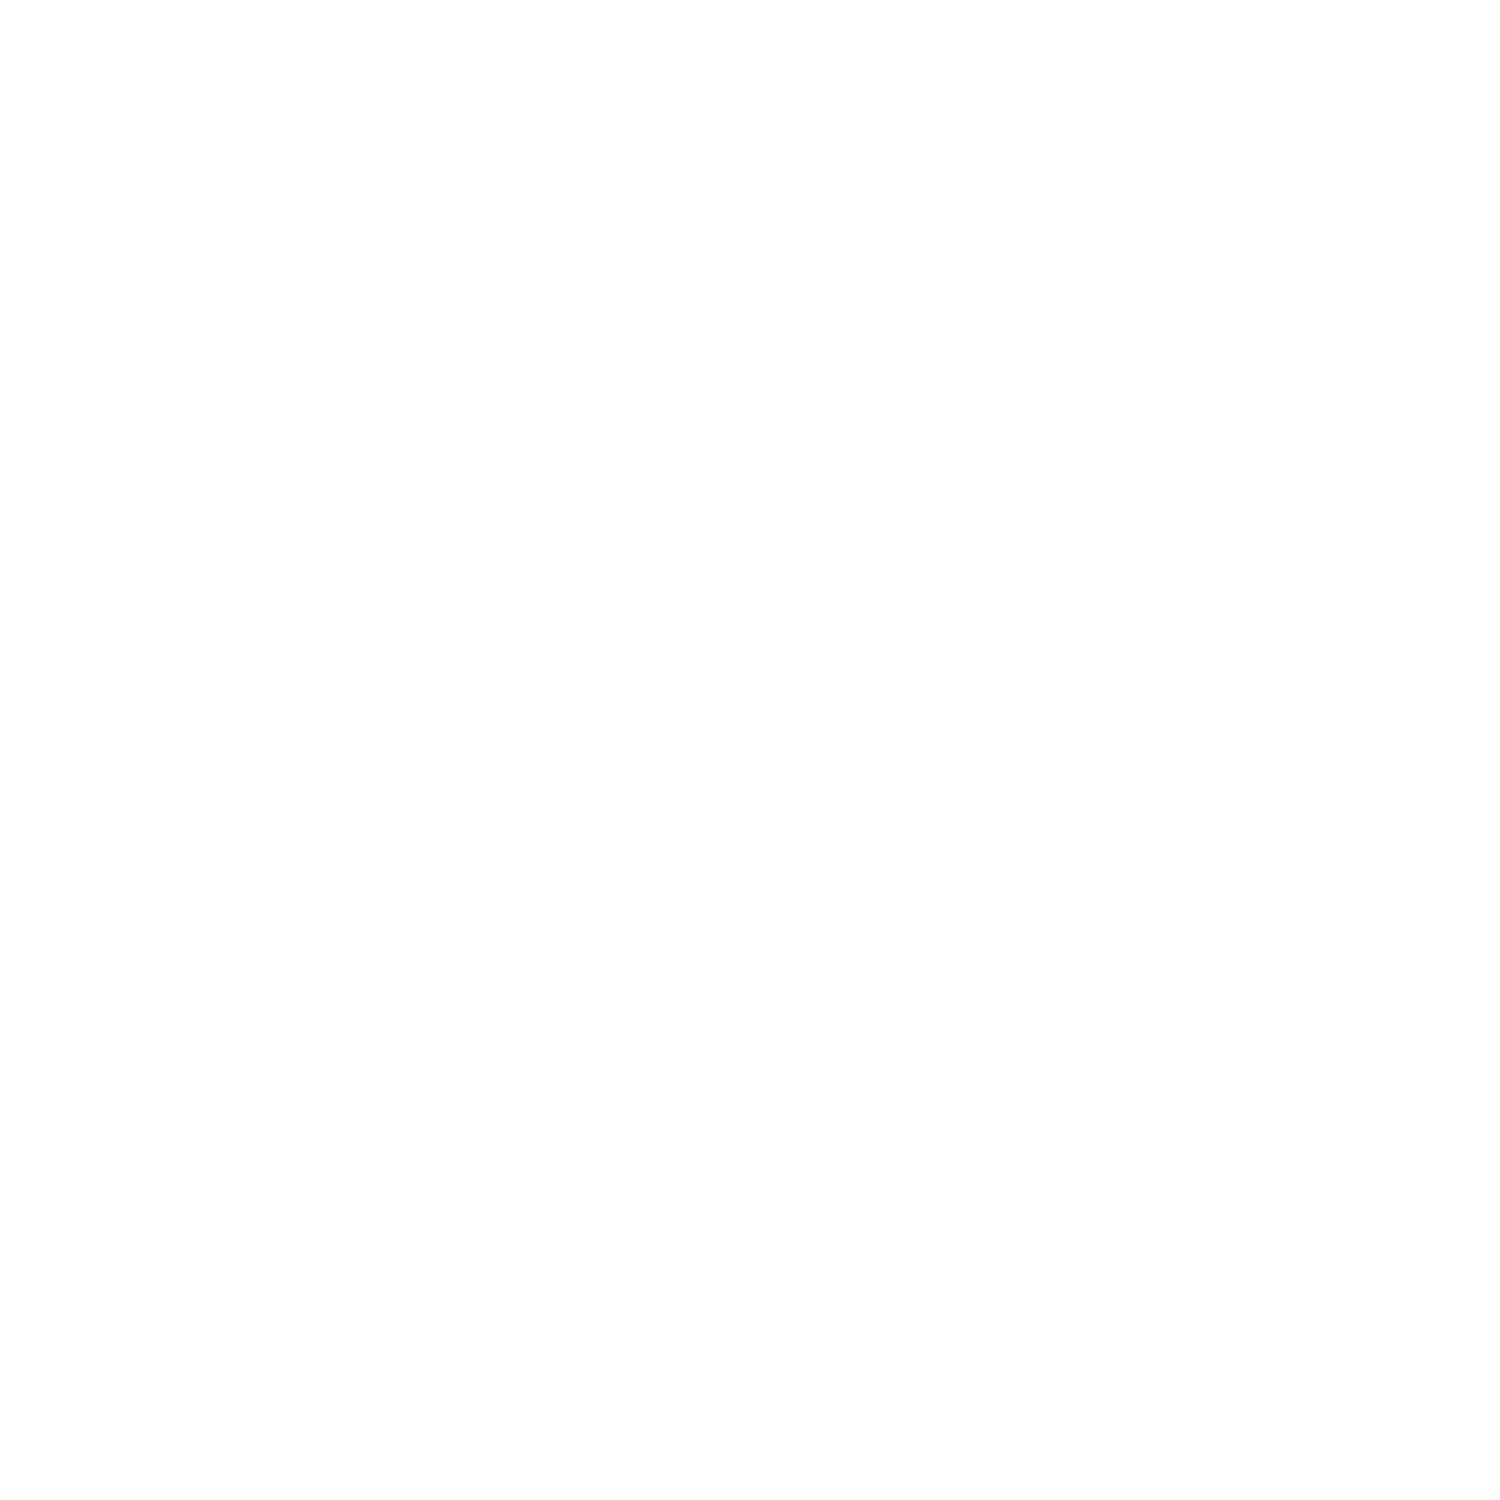 GKI - GKA - Empresa de arquitectura